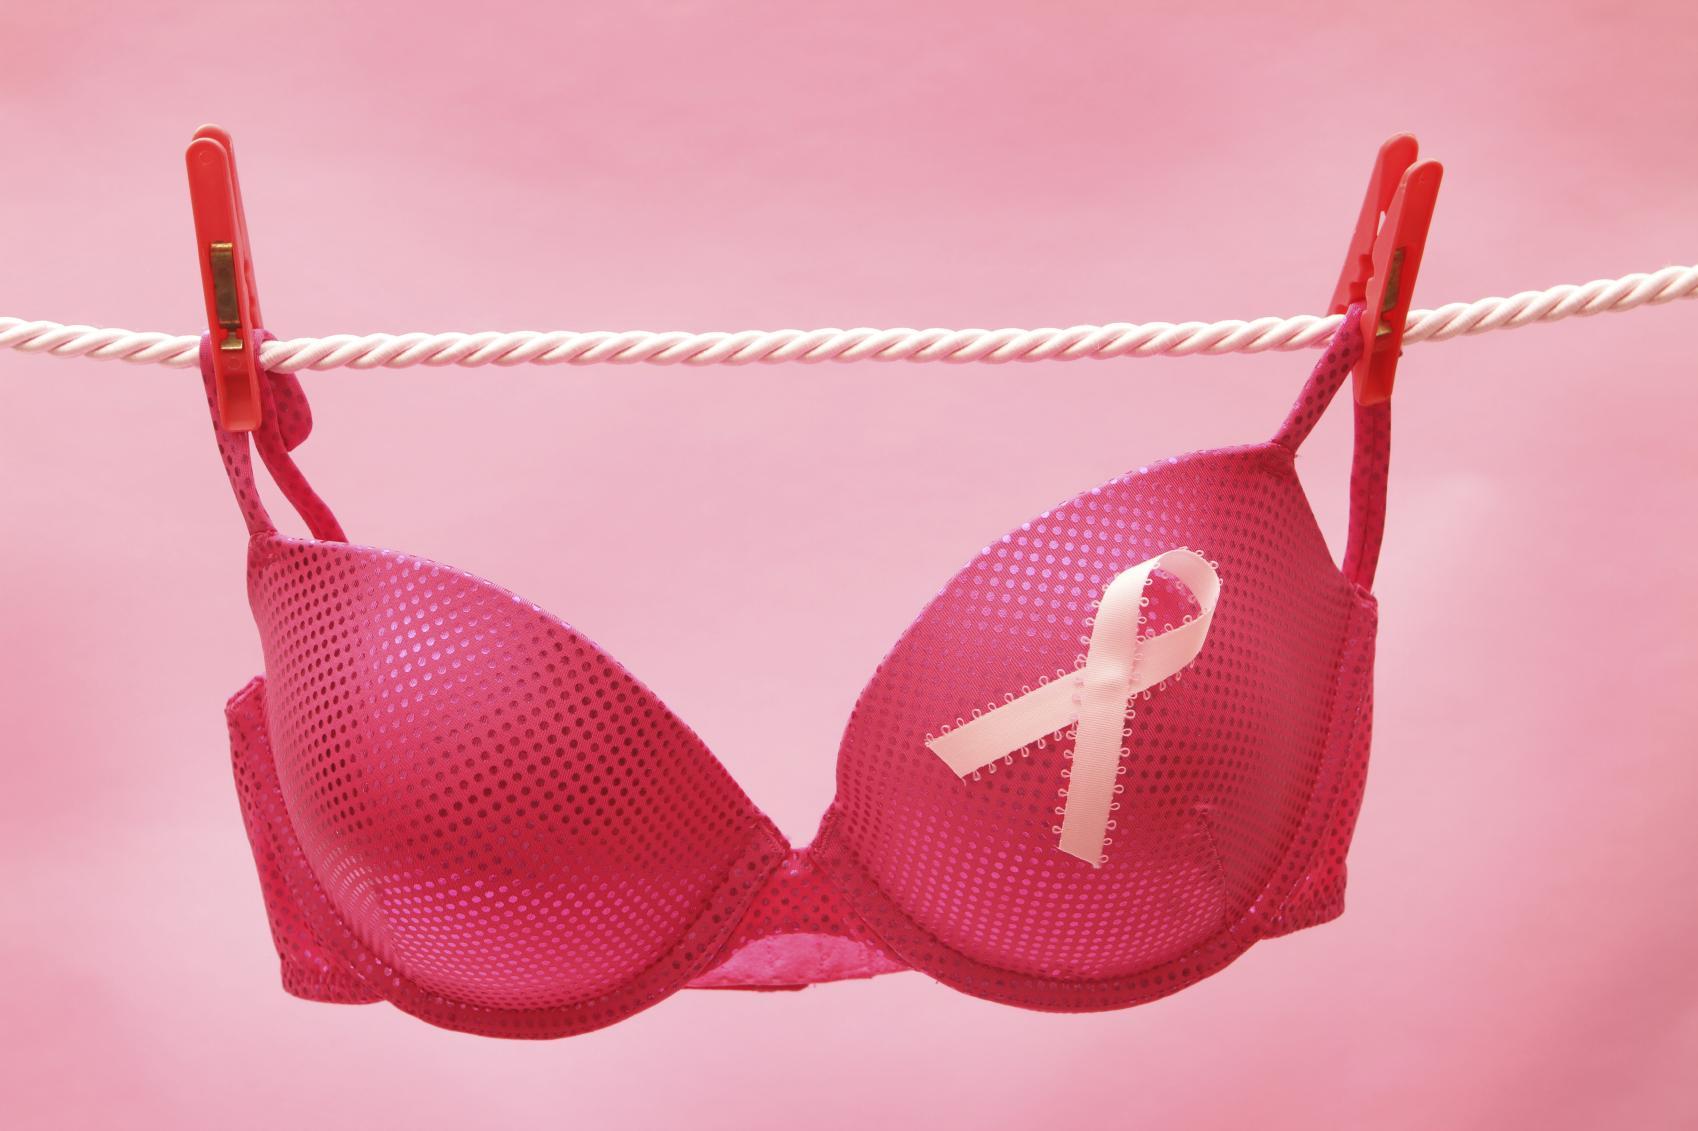 Breast Cancer Awareness Wallpaper For Facebook